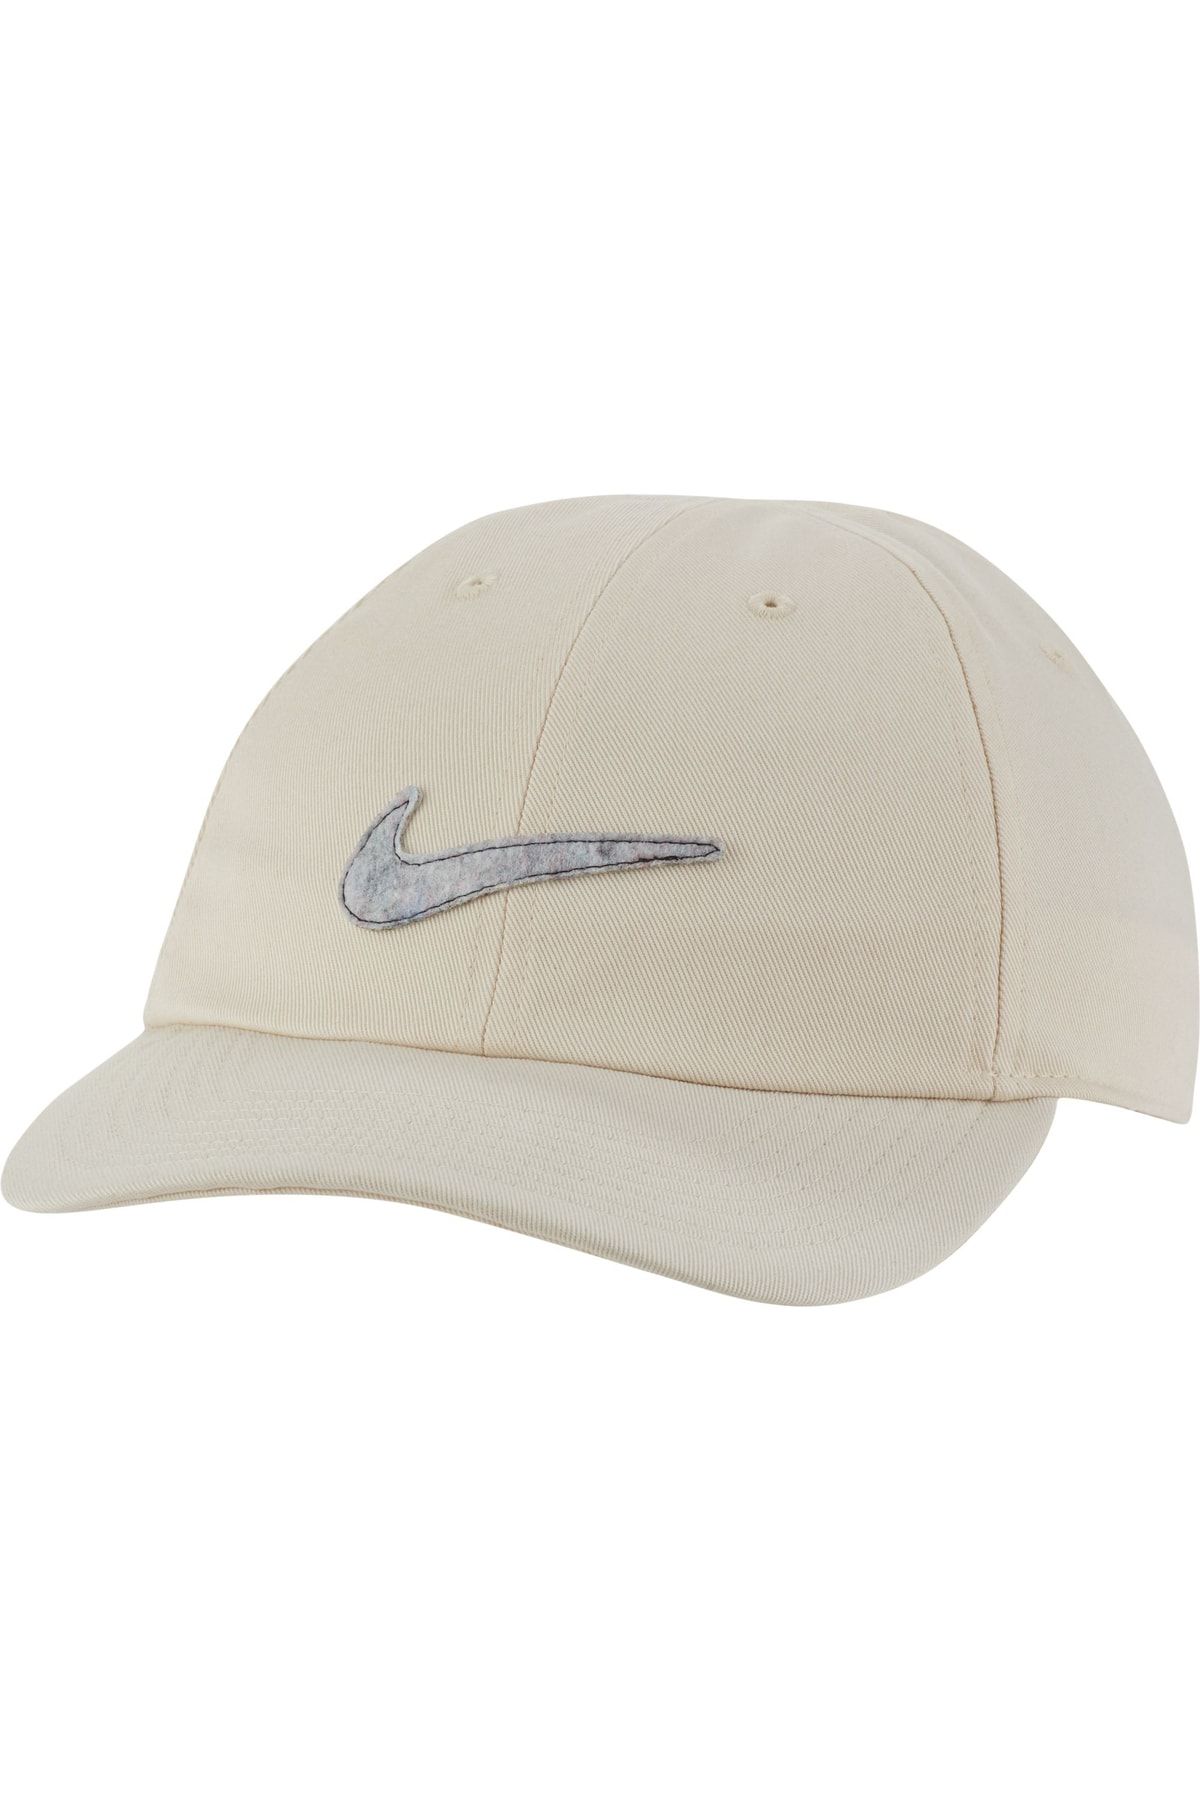 Nike Sportswear Heritage86 M2z Beyaz Renk Unisex Şapka